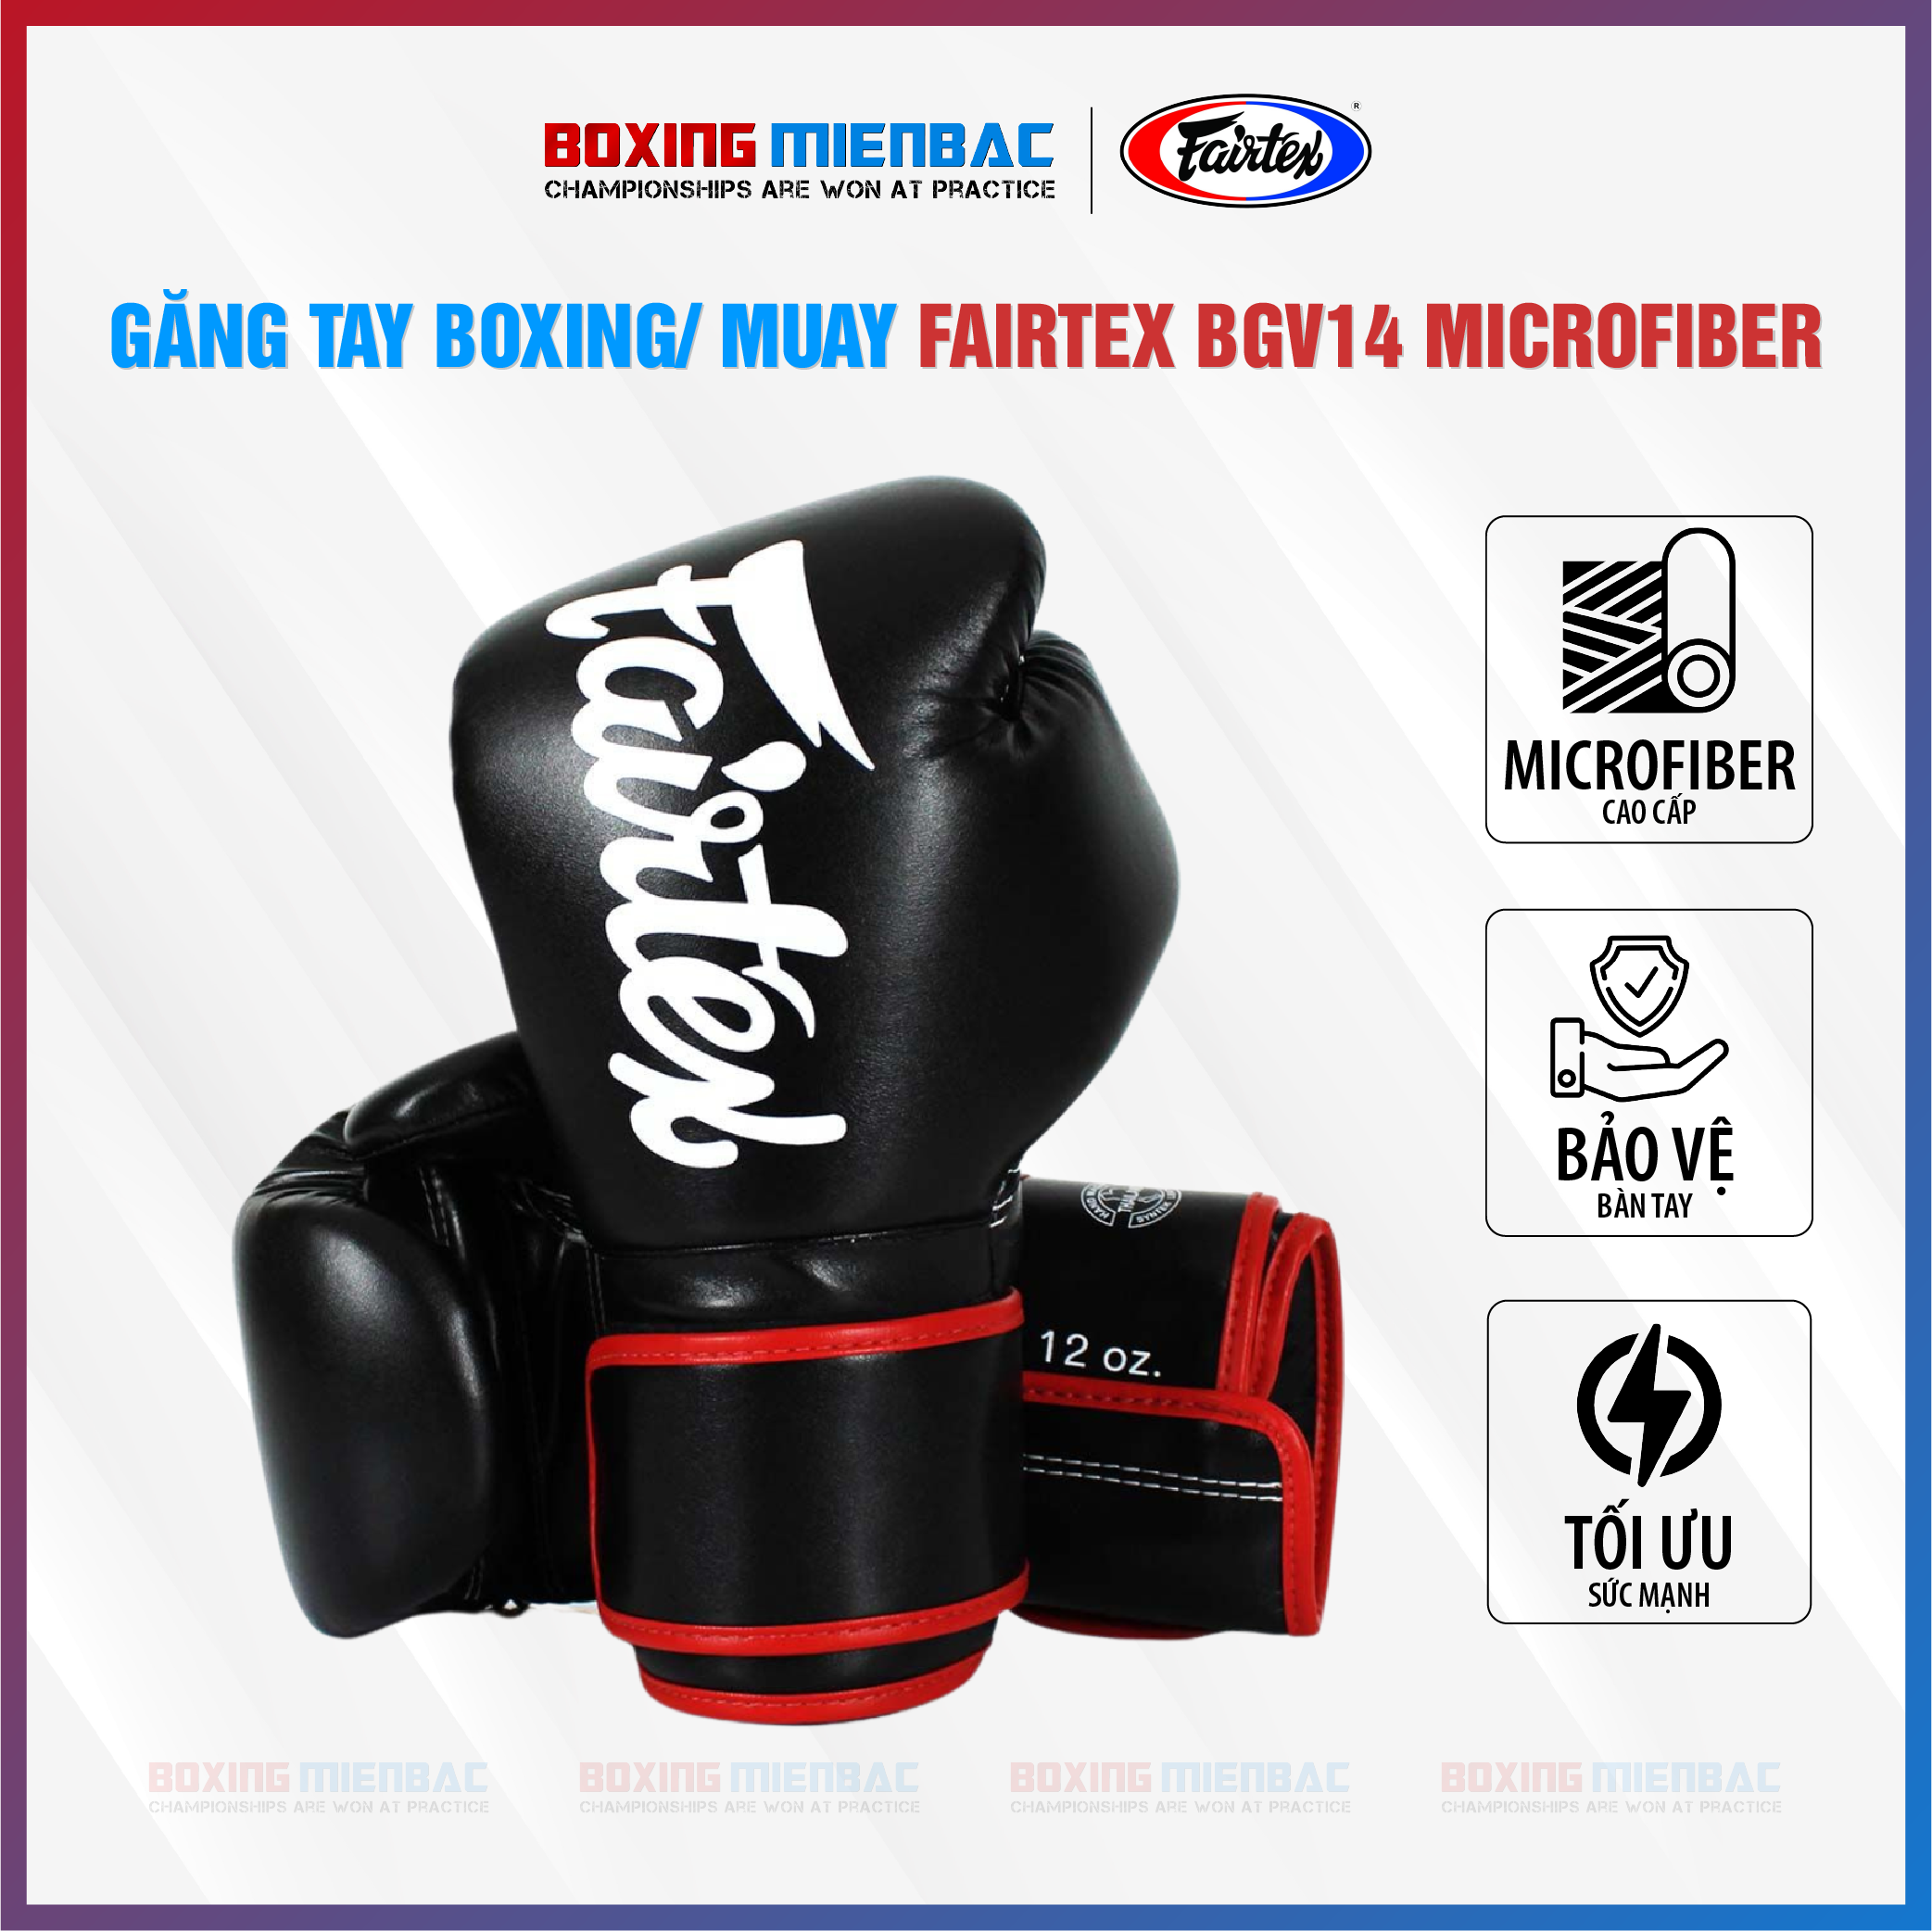 Găng Tay Fairtex Bgv14 Microfiber Leather Đen Đỏ (Made in ThaiLand) - Boxing/ MuayThai/ Kickboxing Training